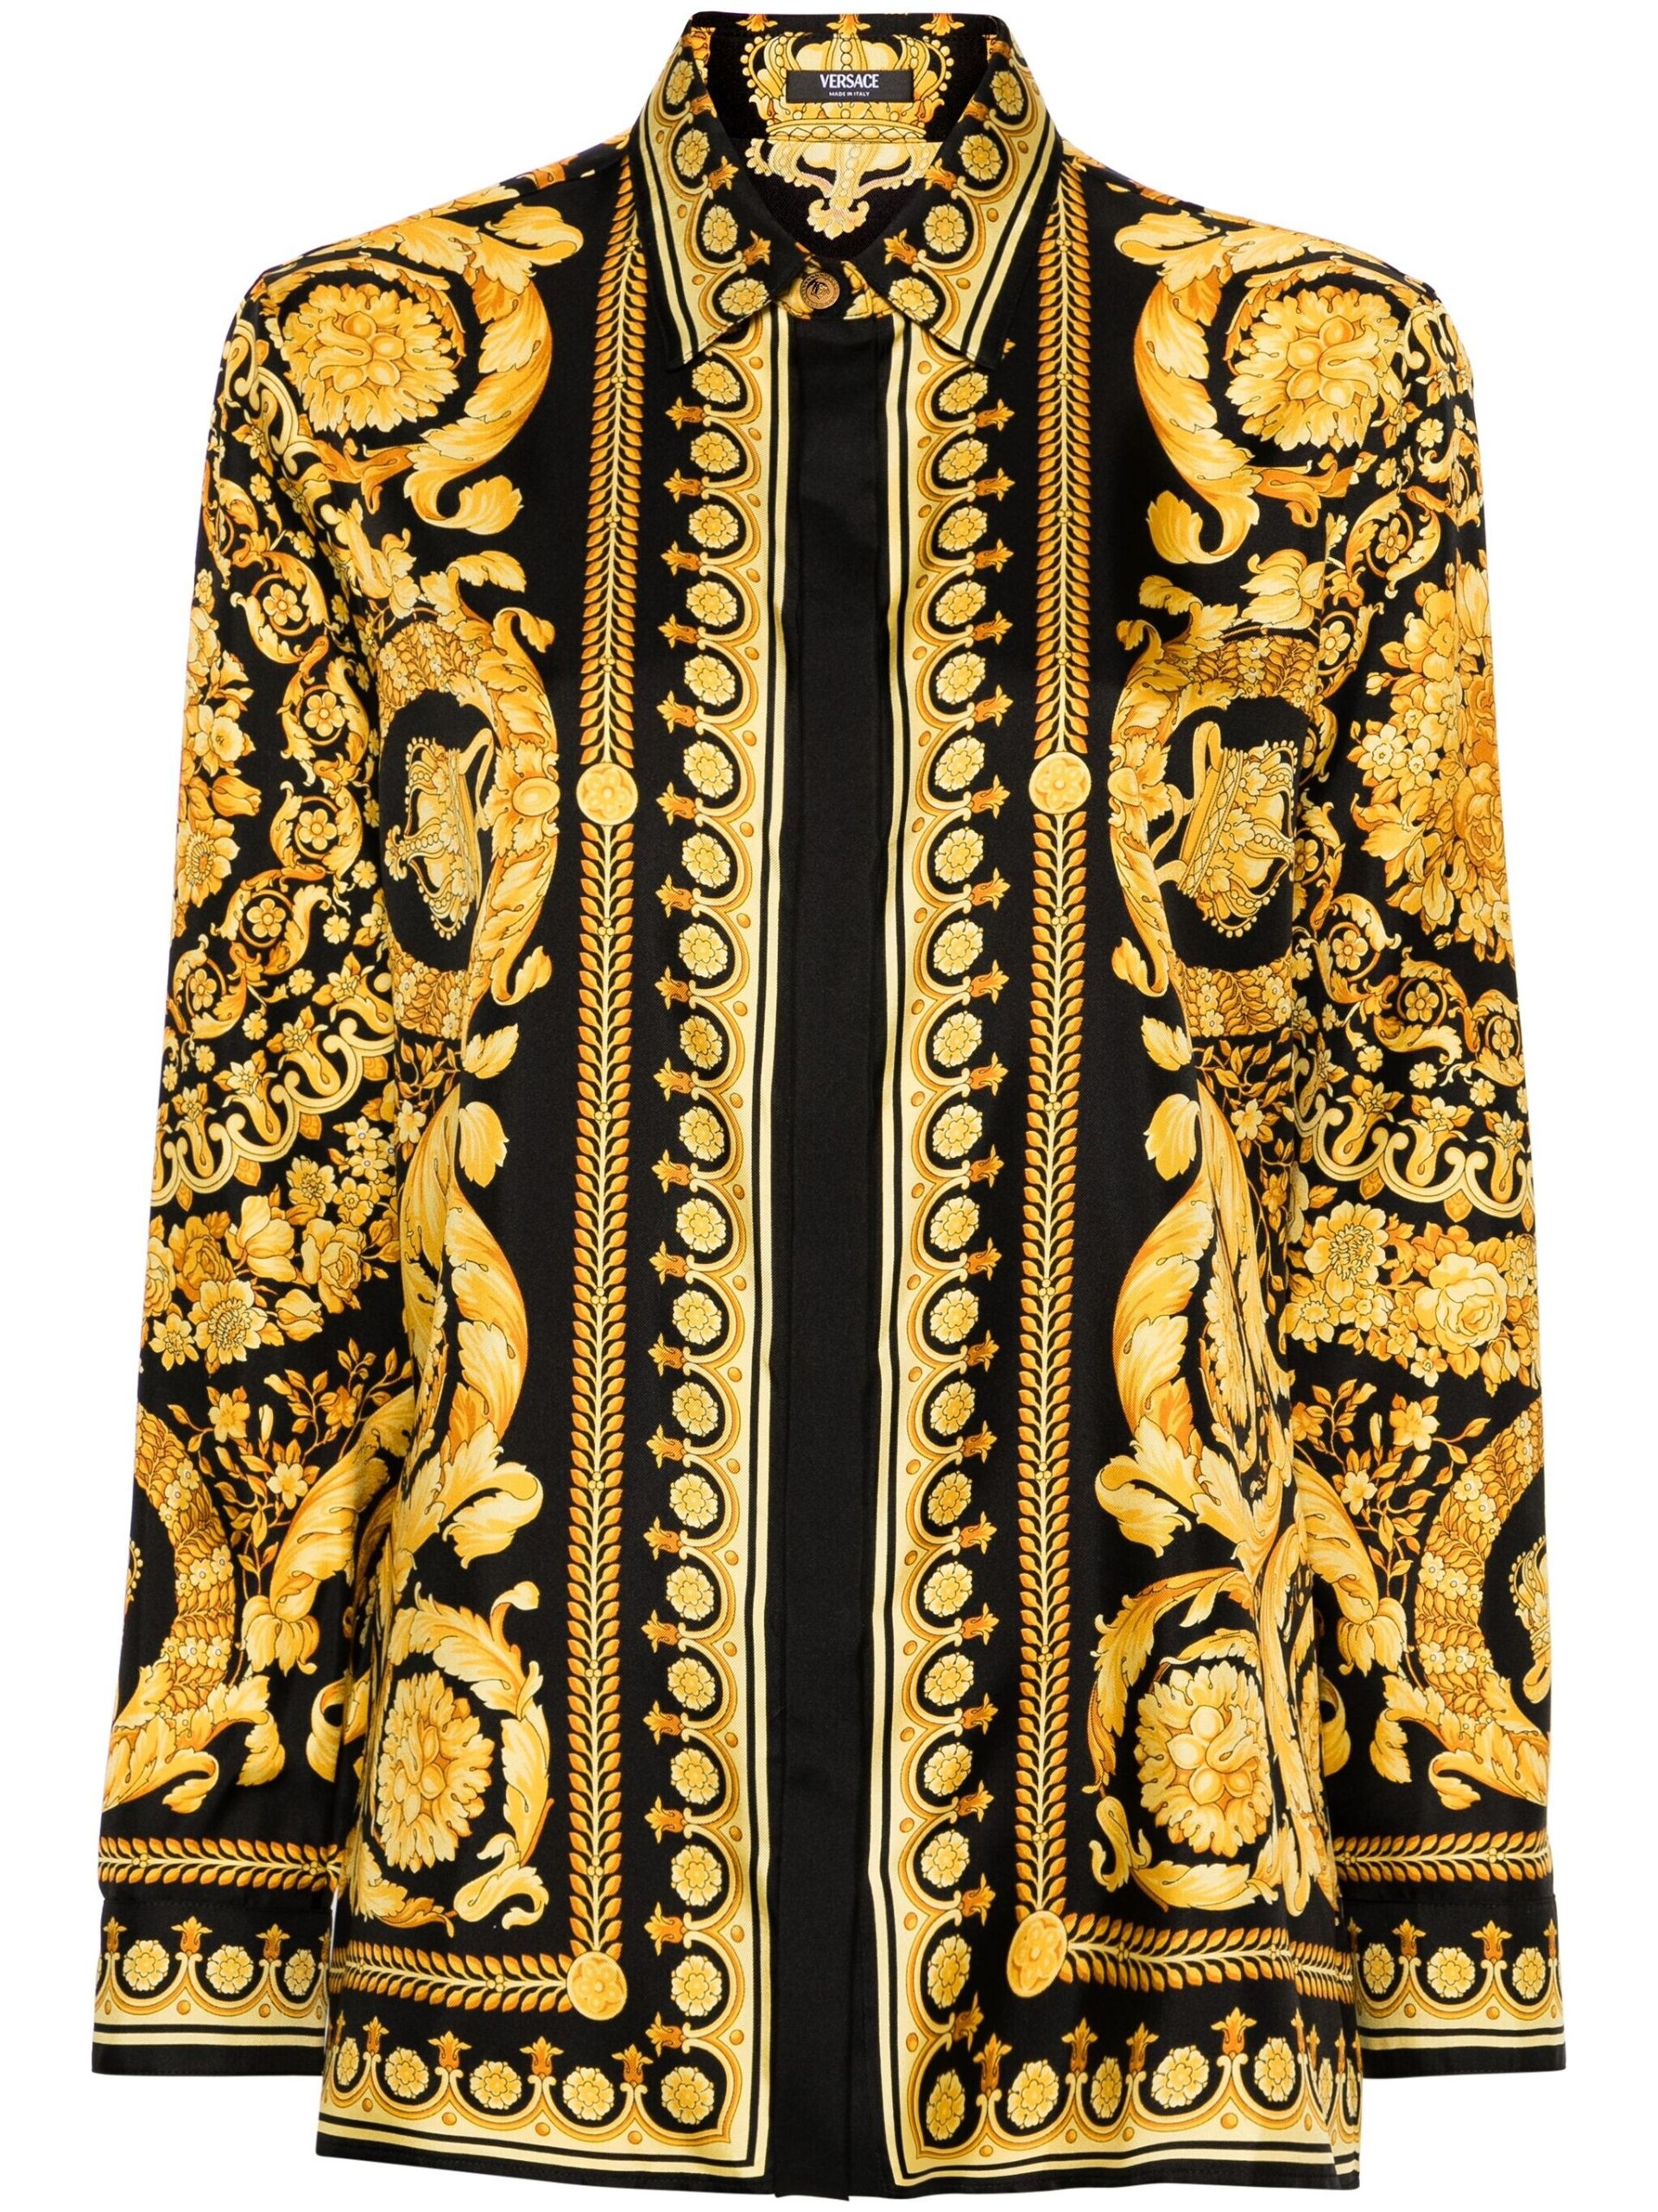 Gold-Tone Barocco-Print Silk Shirt - 1